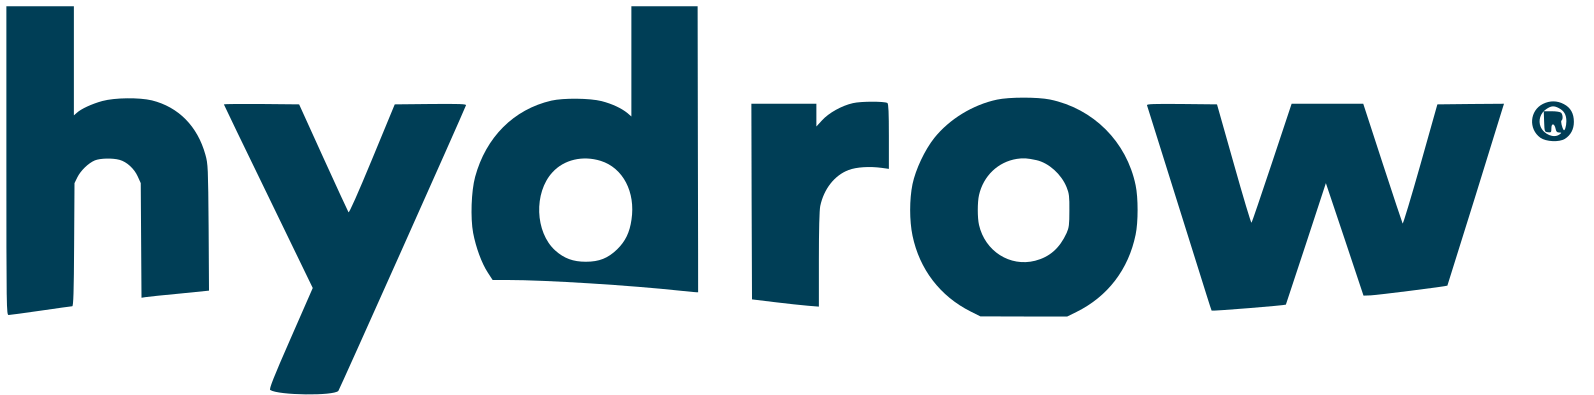 hydrow logo